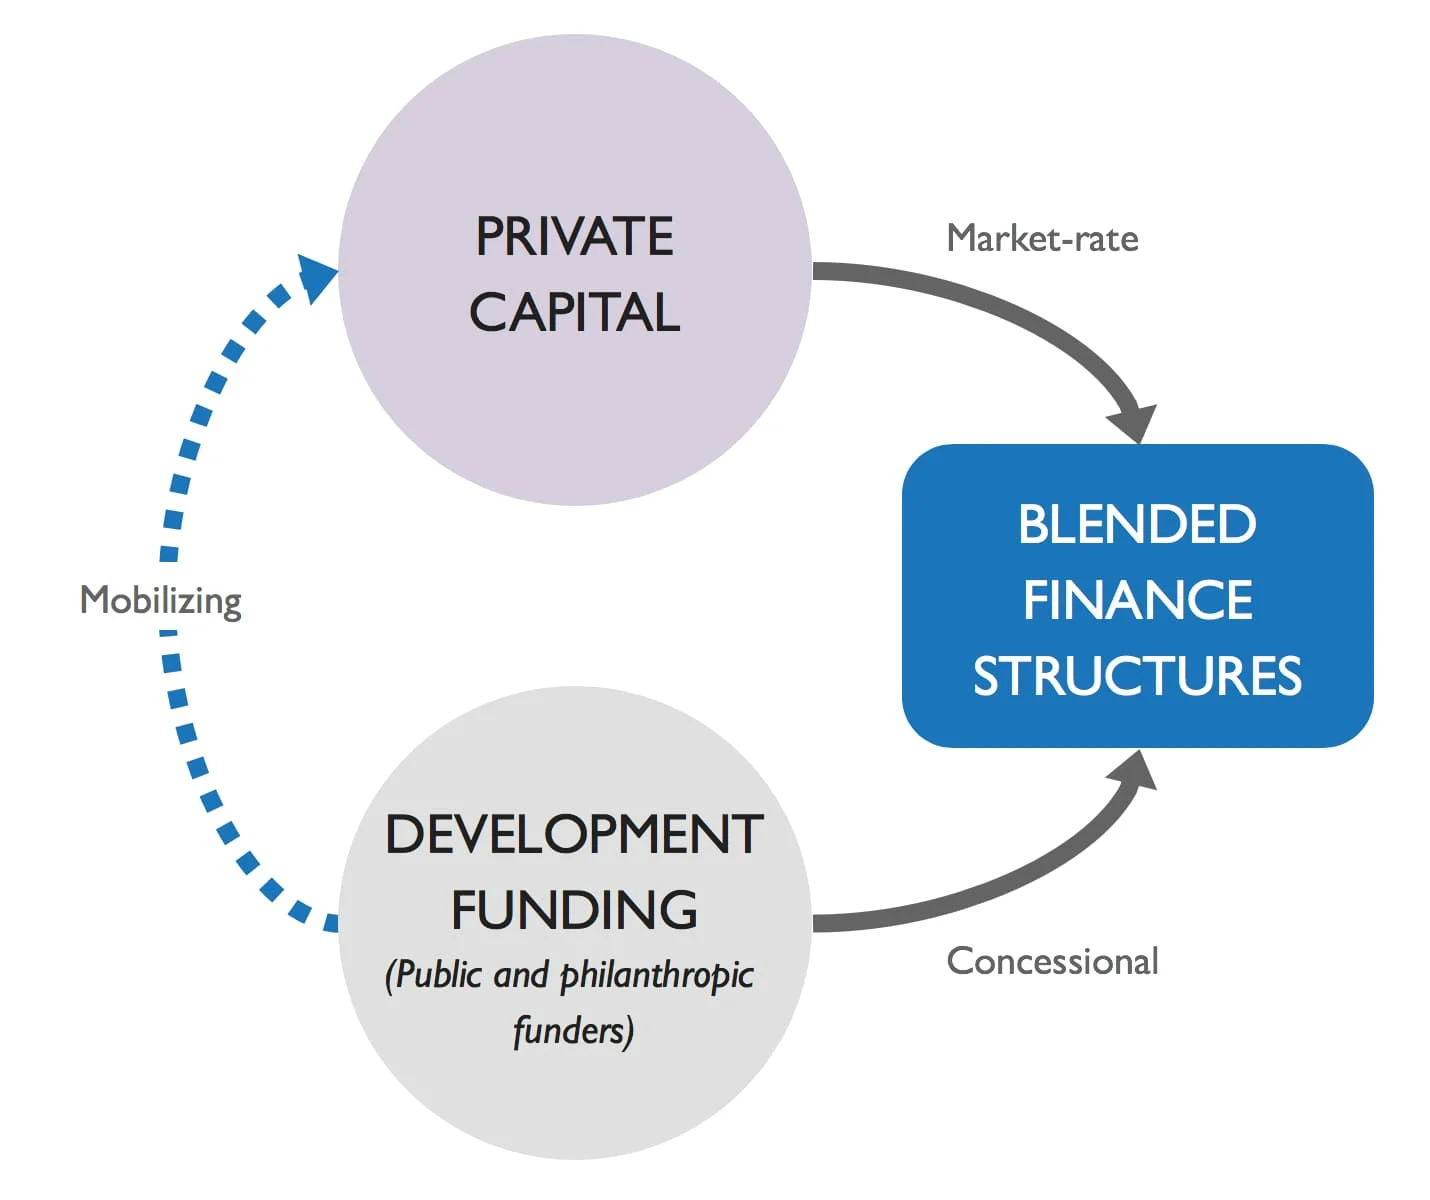 Blended Finance Structures